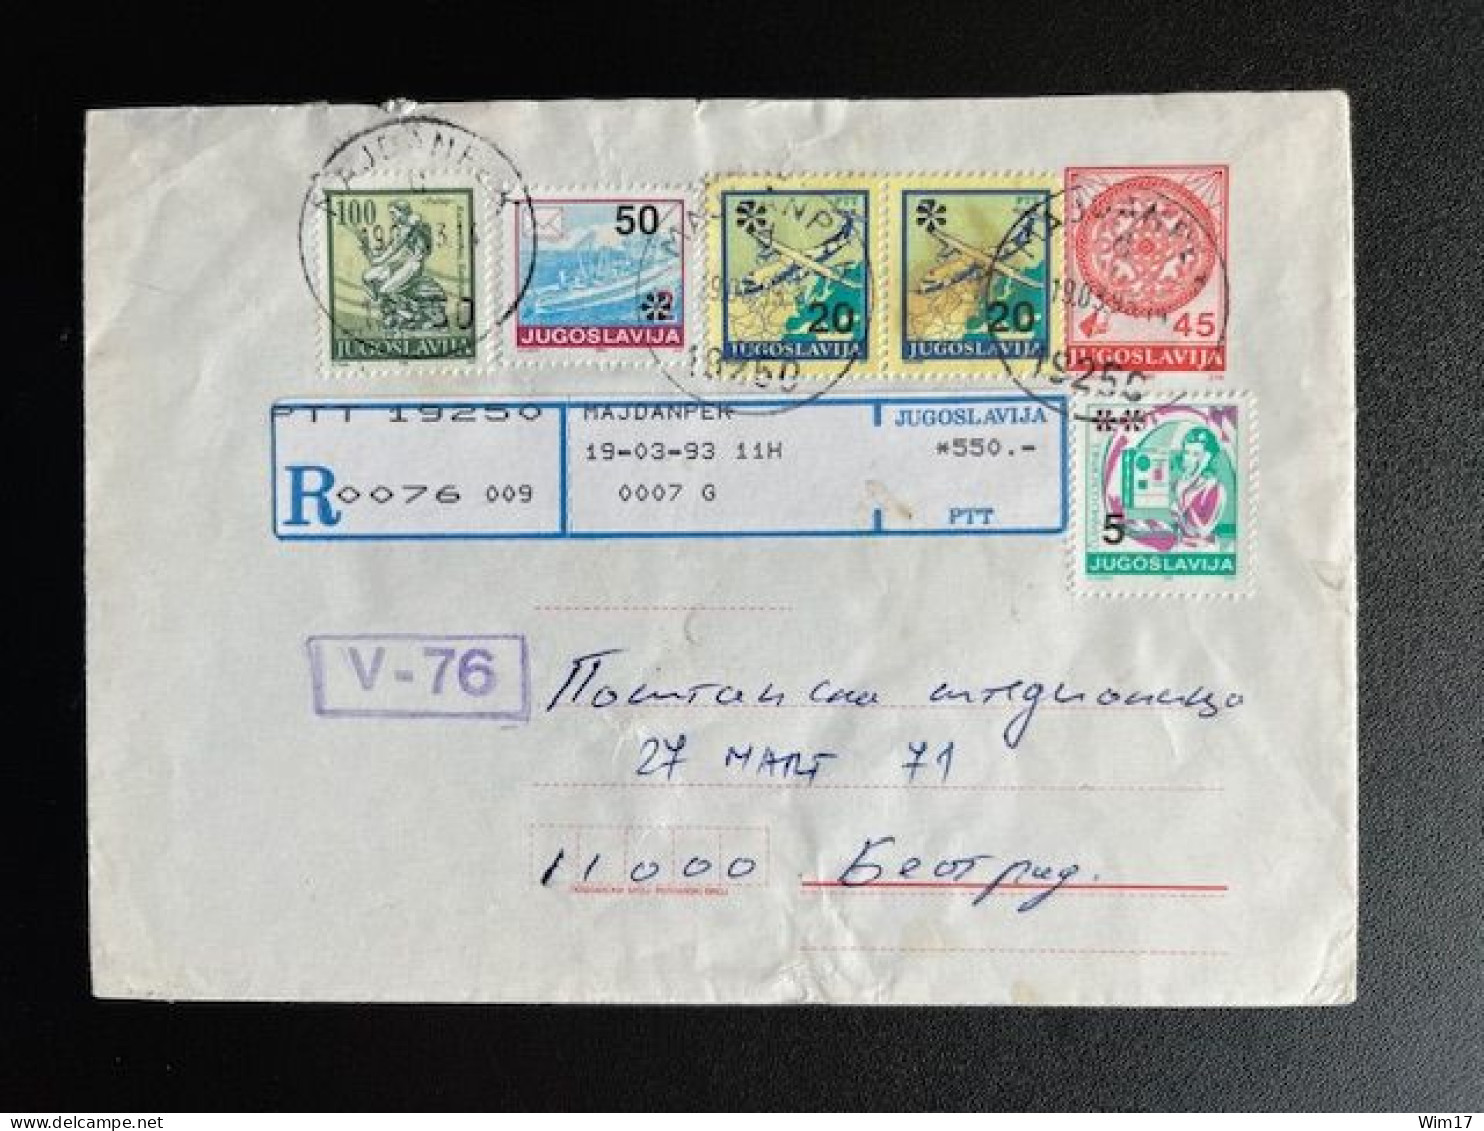 JUGOSLAVIJA YUGOSLAVIA 1993 REGISTERED LETTER MAJDANPEK TO BELGRADE BEOGRAD 19-03-1993 - Lettres & Documents